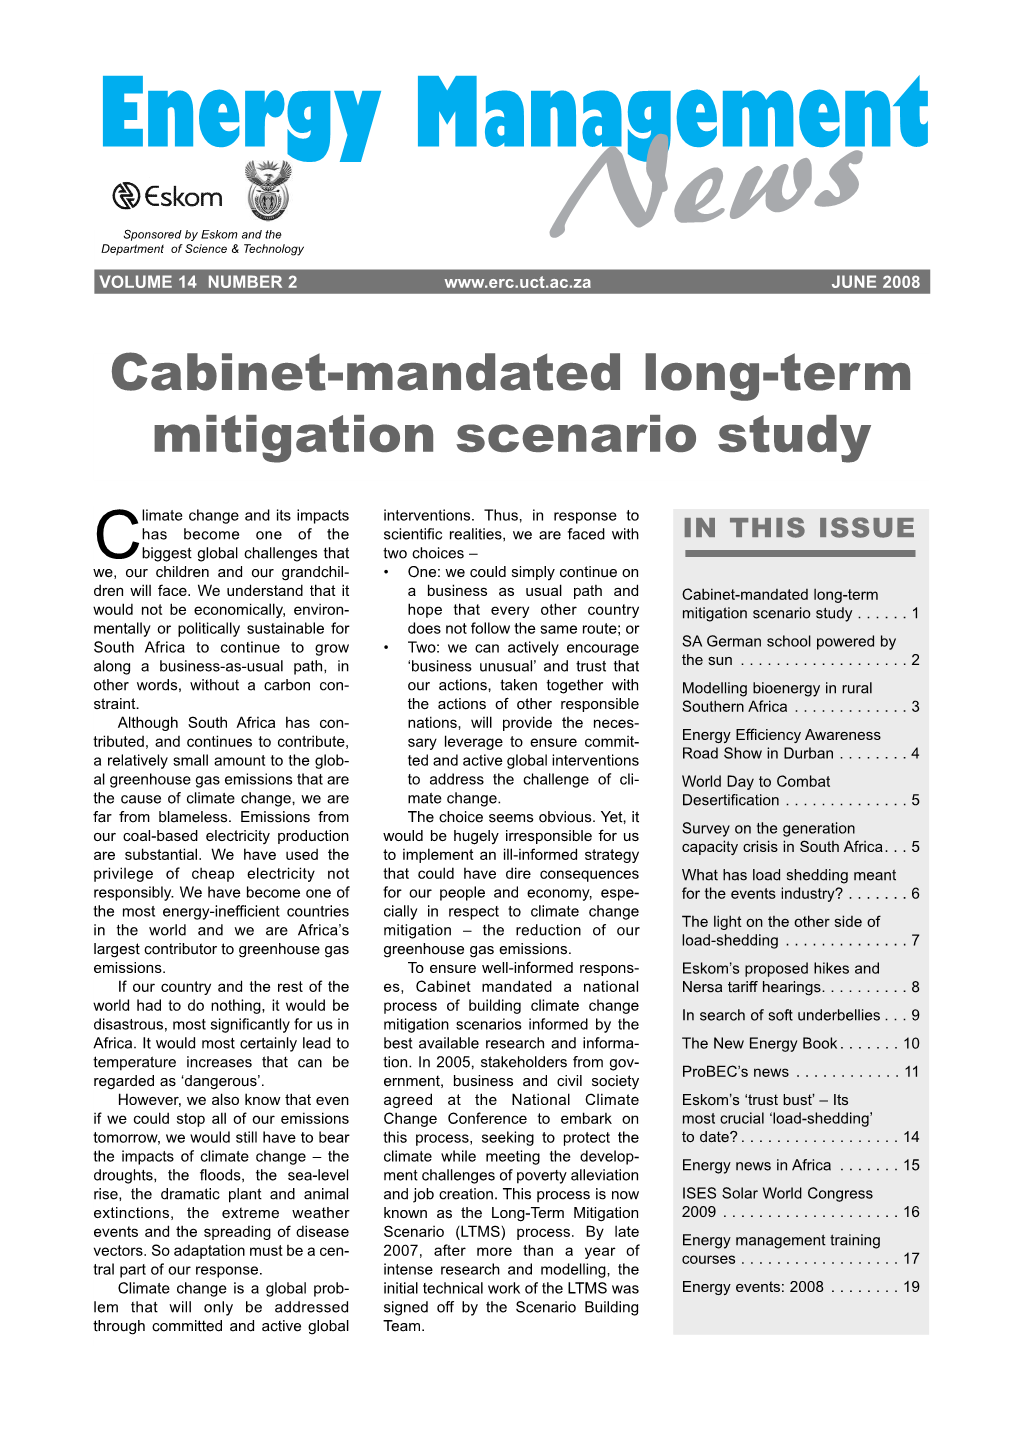 Cabinet-Mandated Long-Term Mitigation Scenario Study